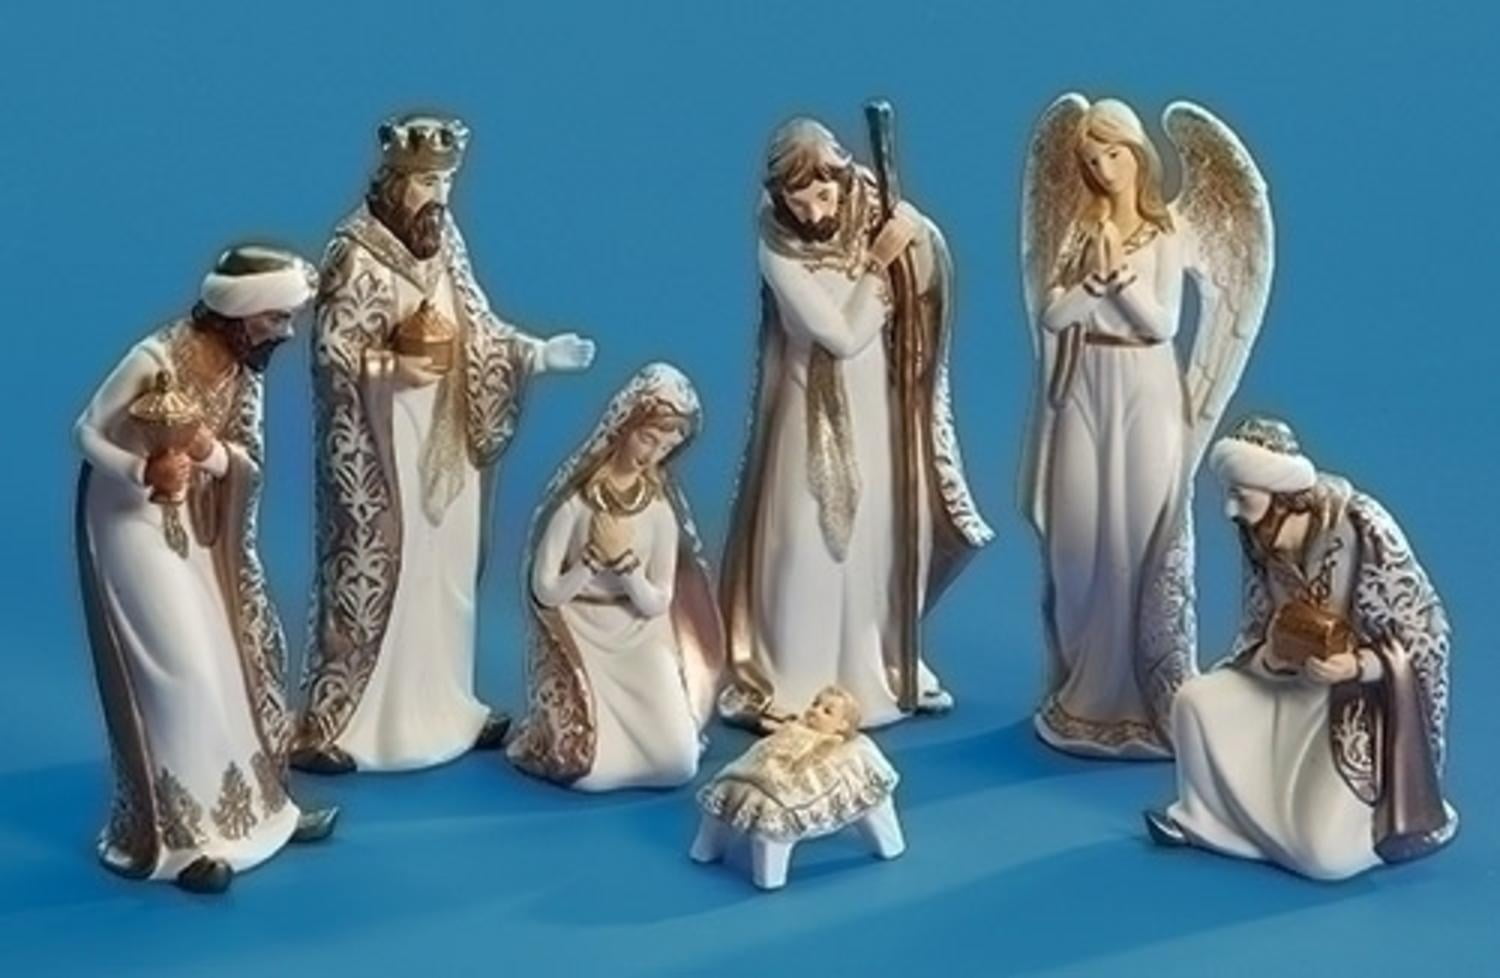 Porcelain Nativity Religious Scene Six Figures Christmas Decoration